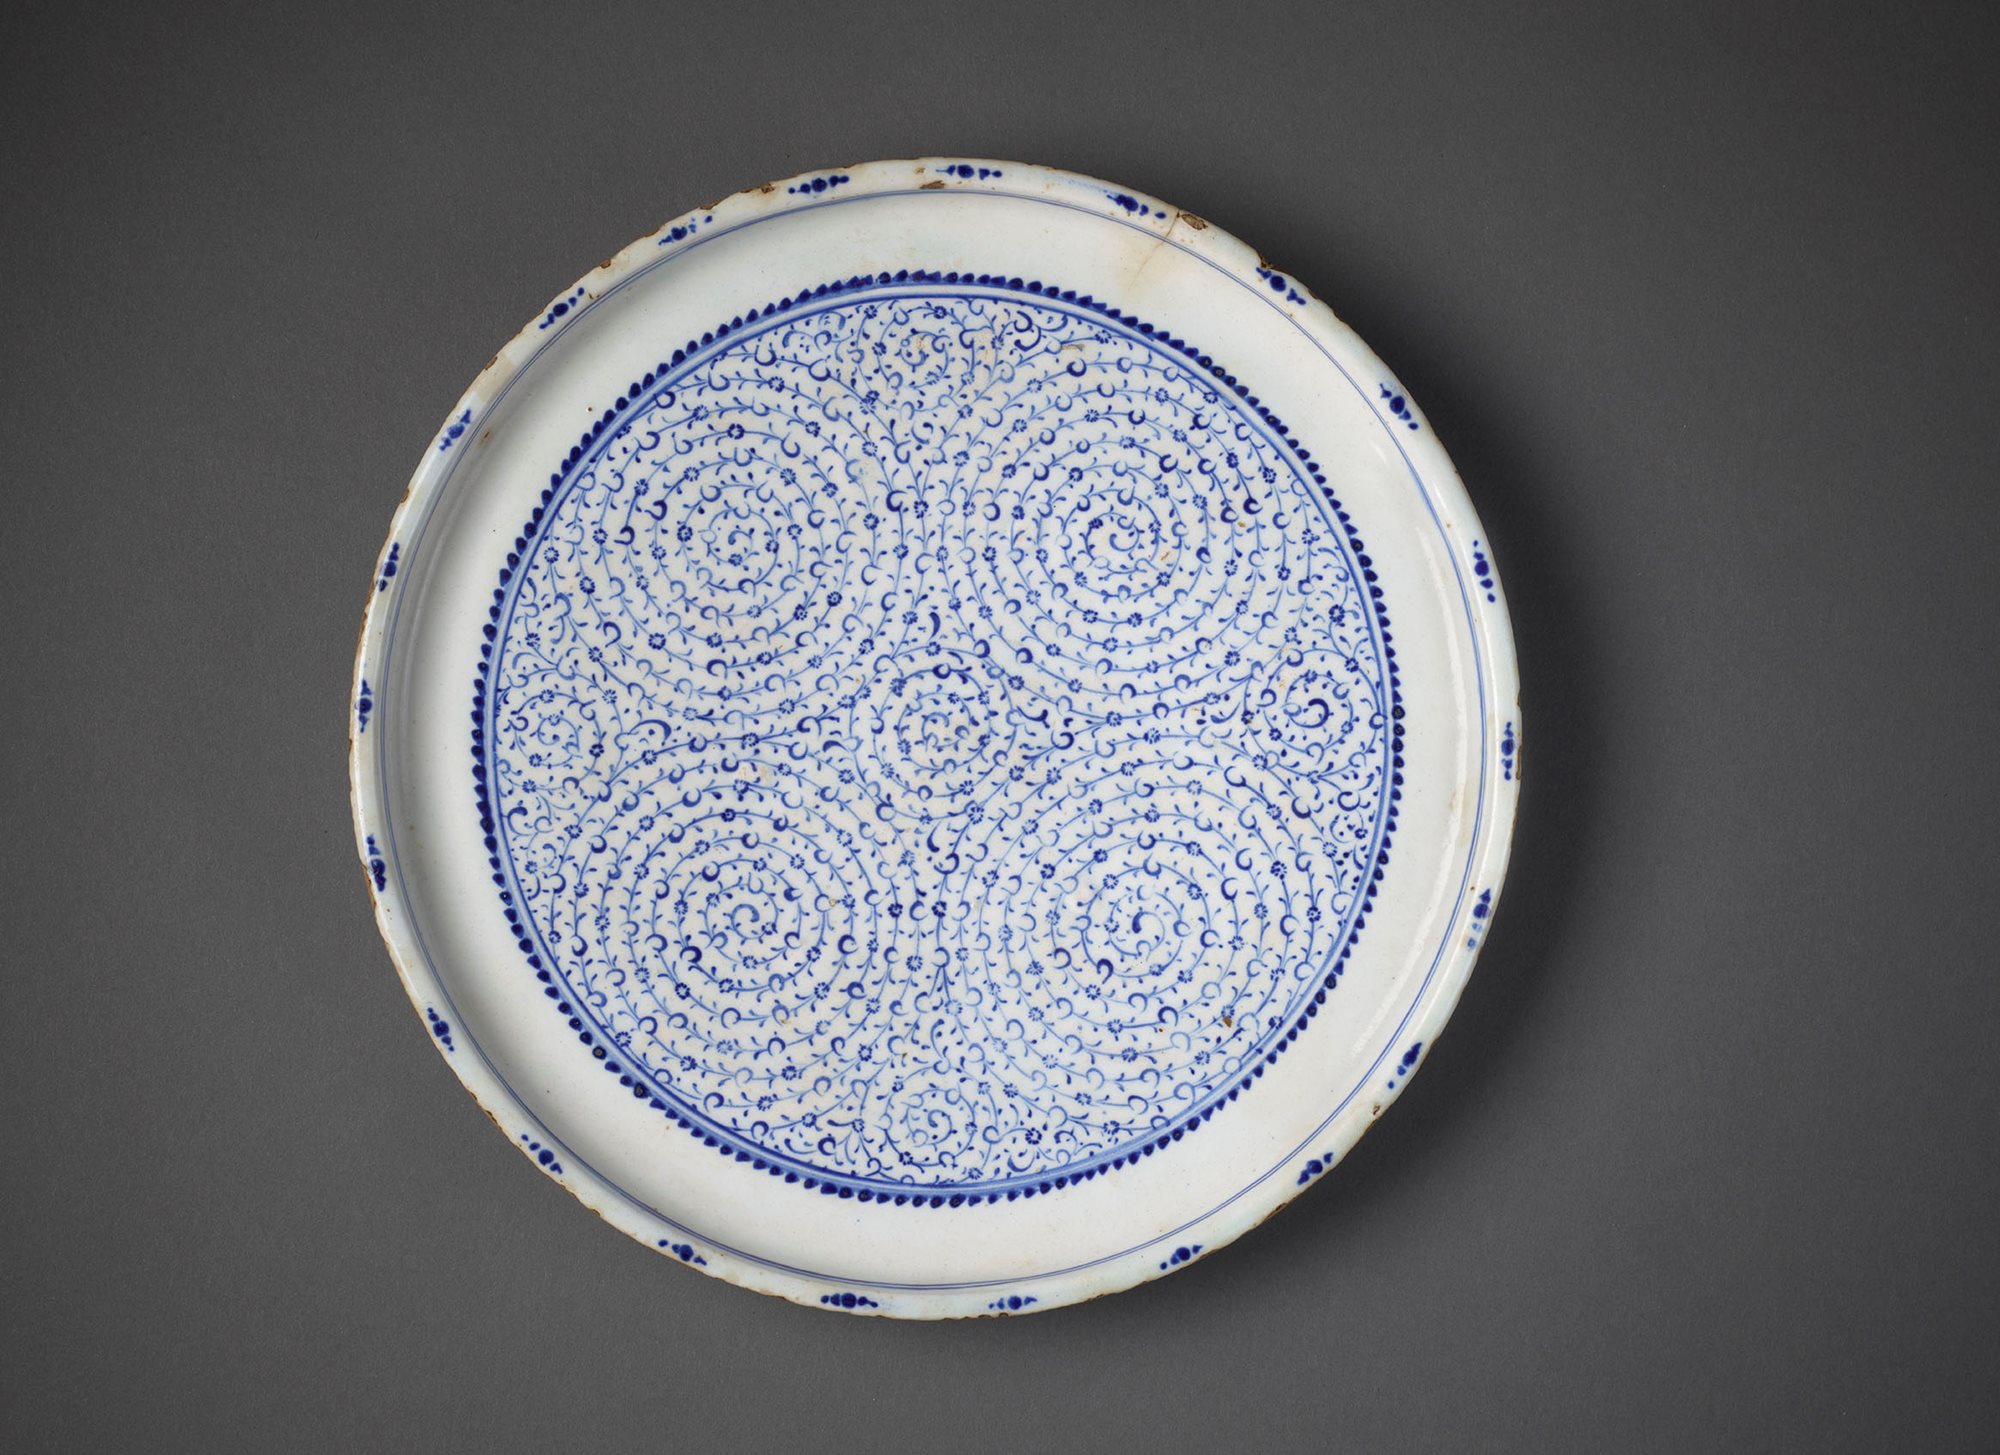 A pottery dish